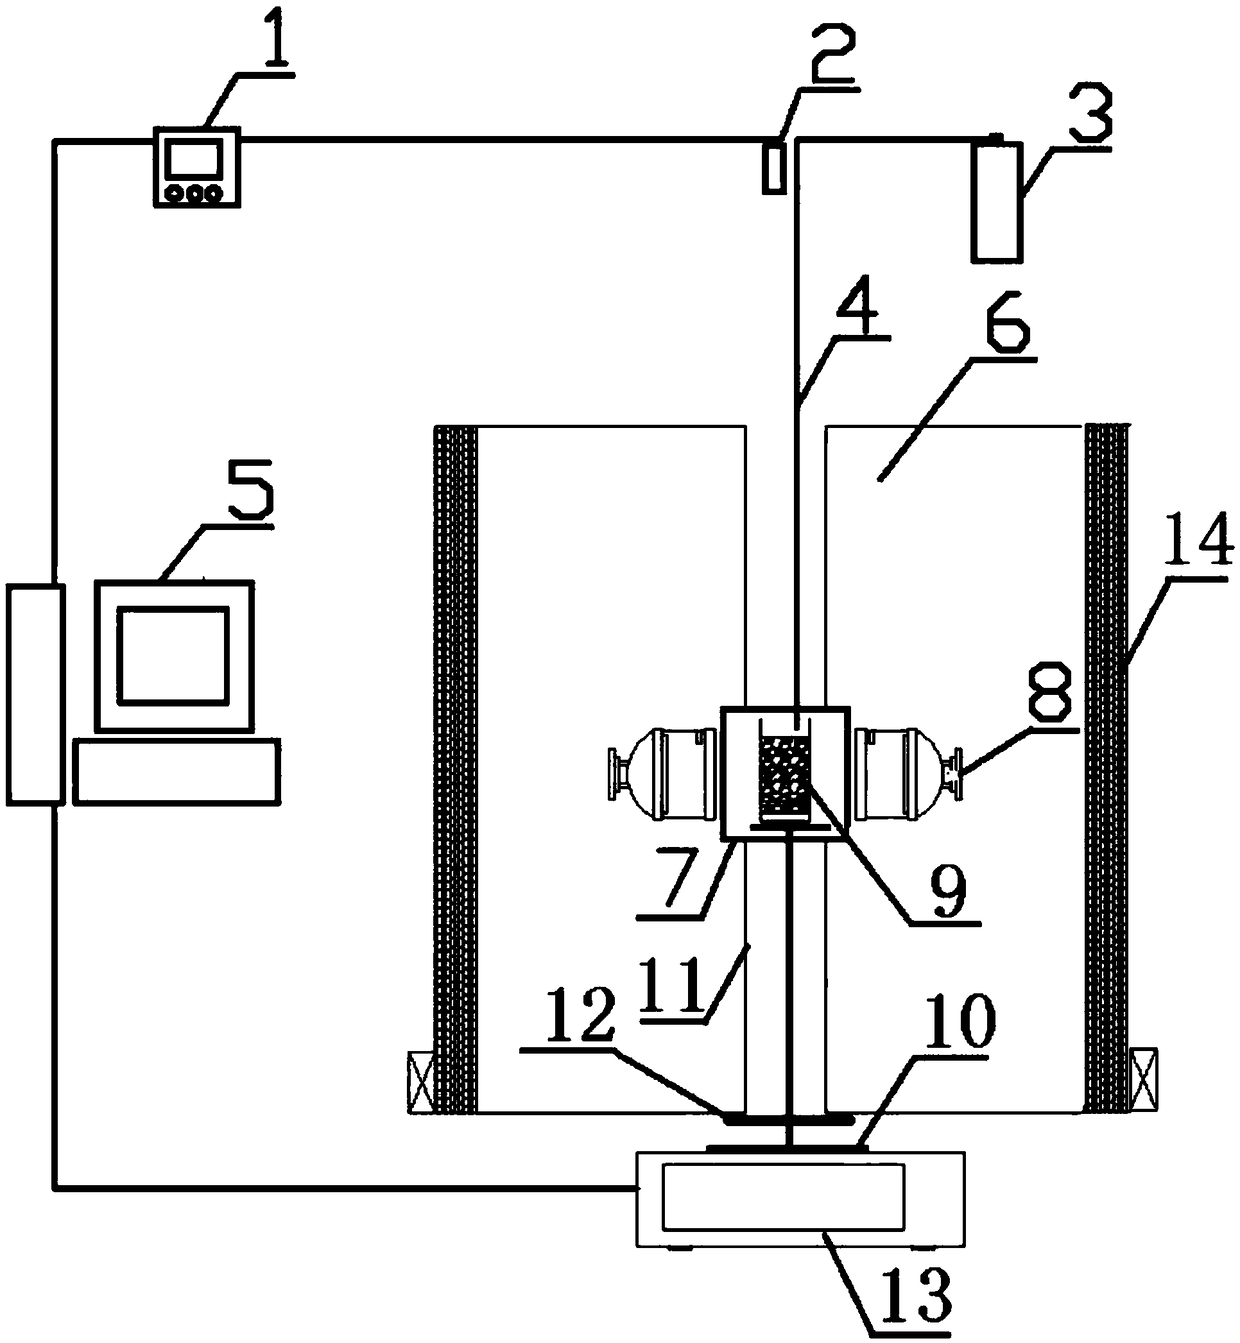 Thermogravimetric analysis device and method for microwave pyrolysis sludge